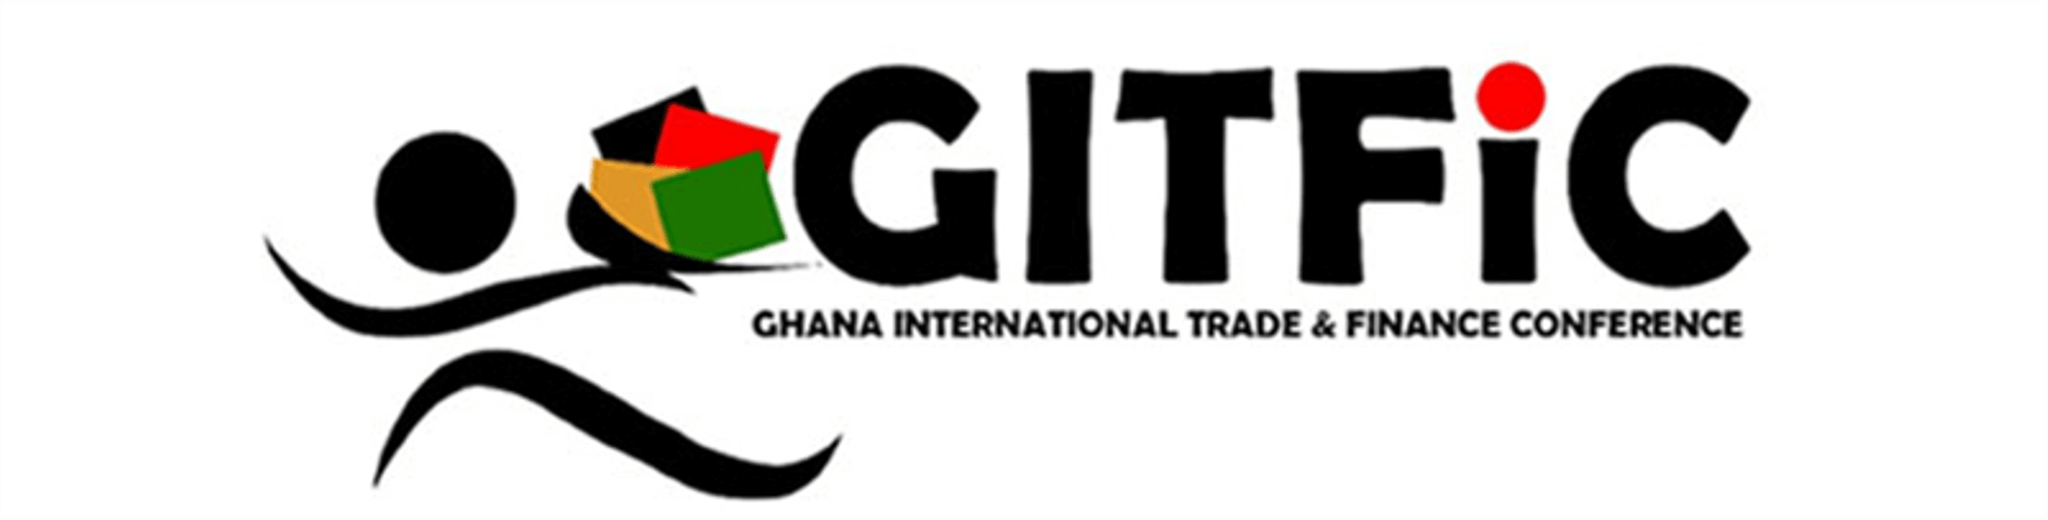 Ghana International Trade & Finance Conference